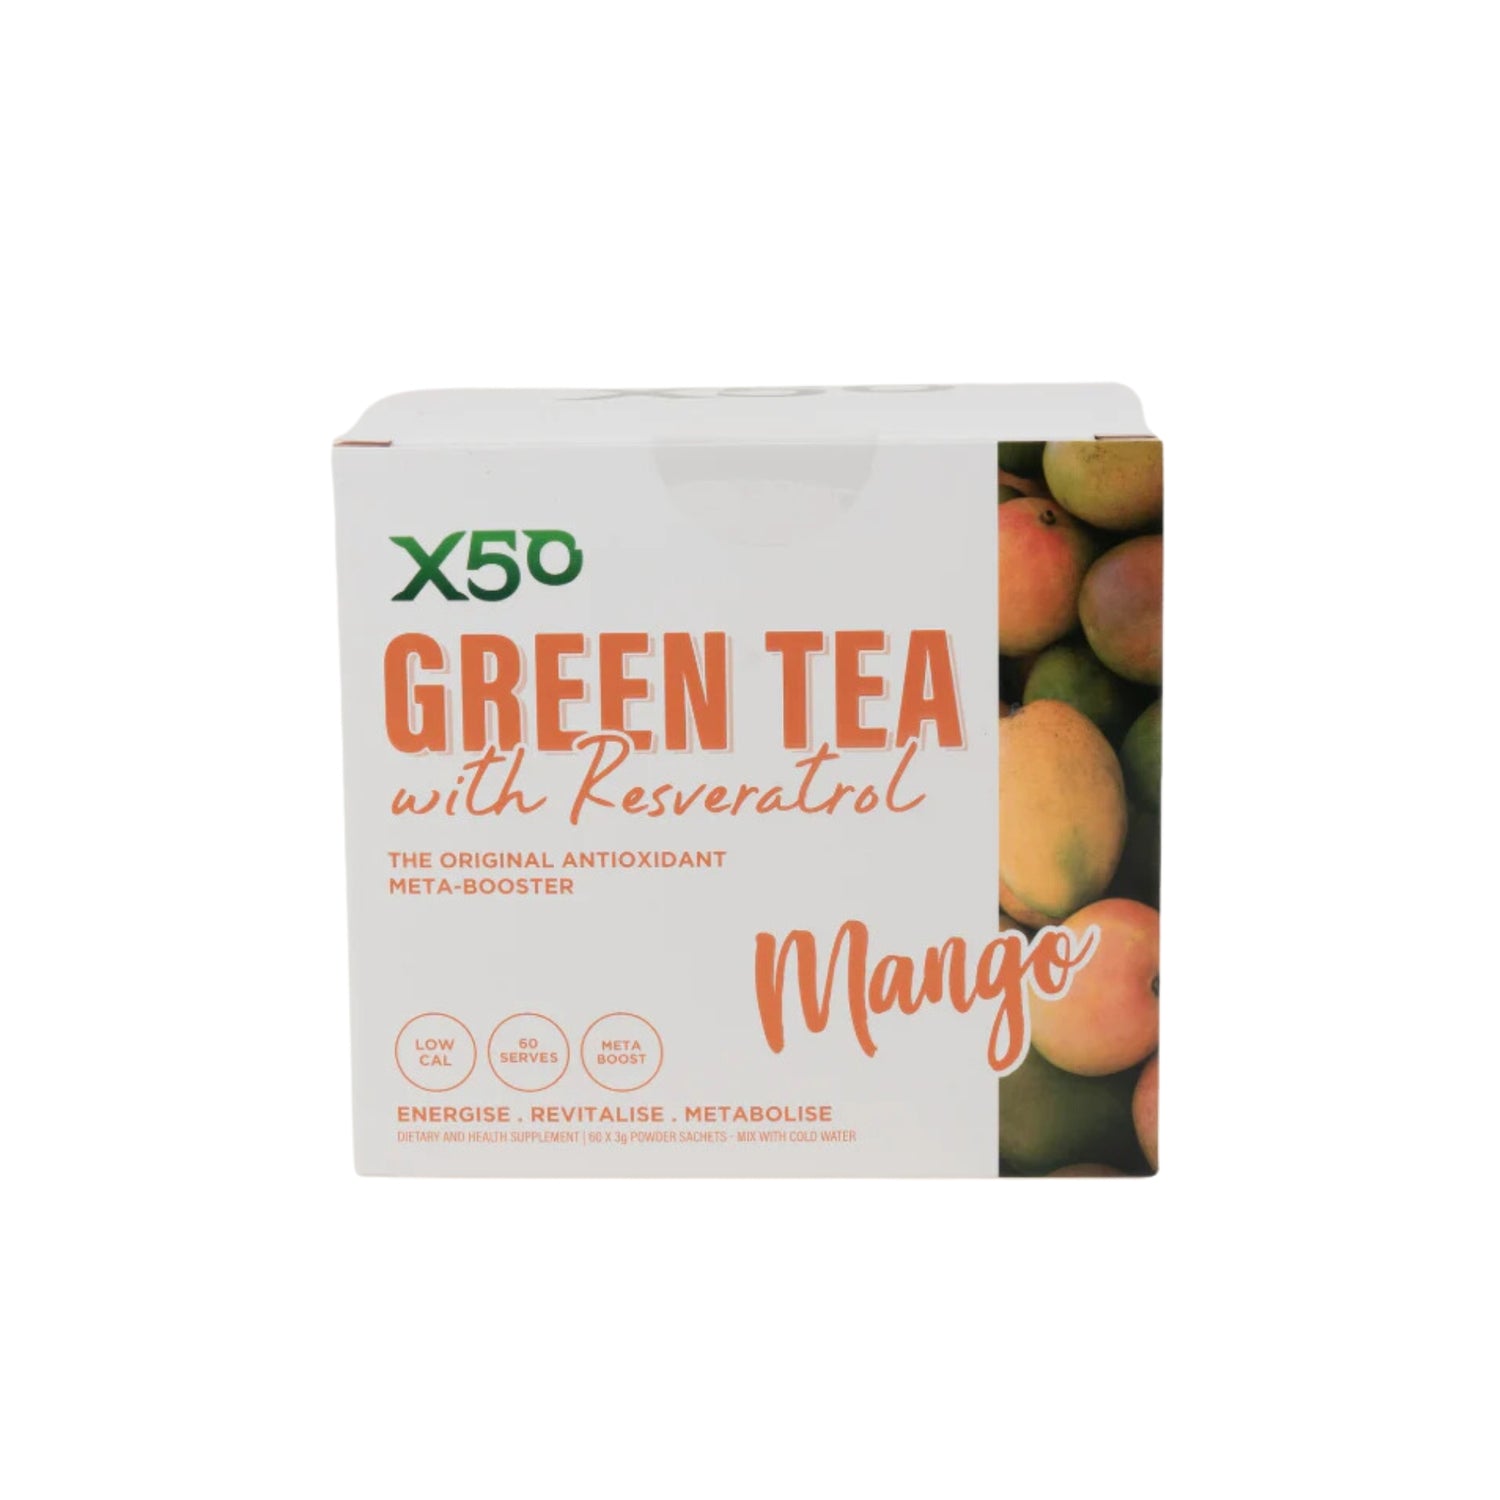 X50 GreenTea - 60 Serve Mango